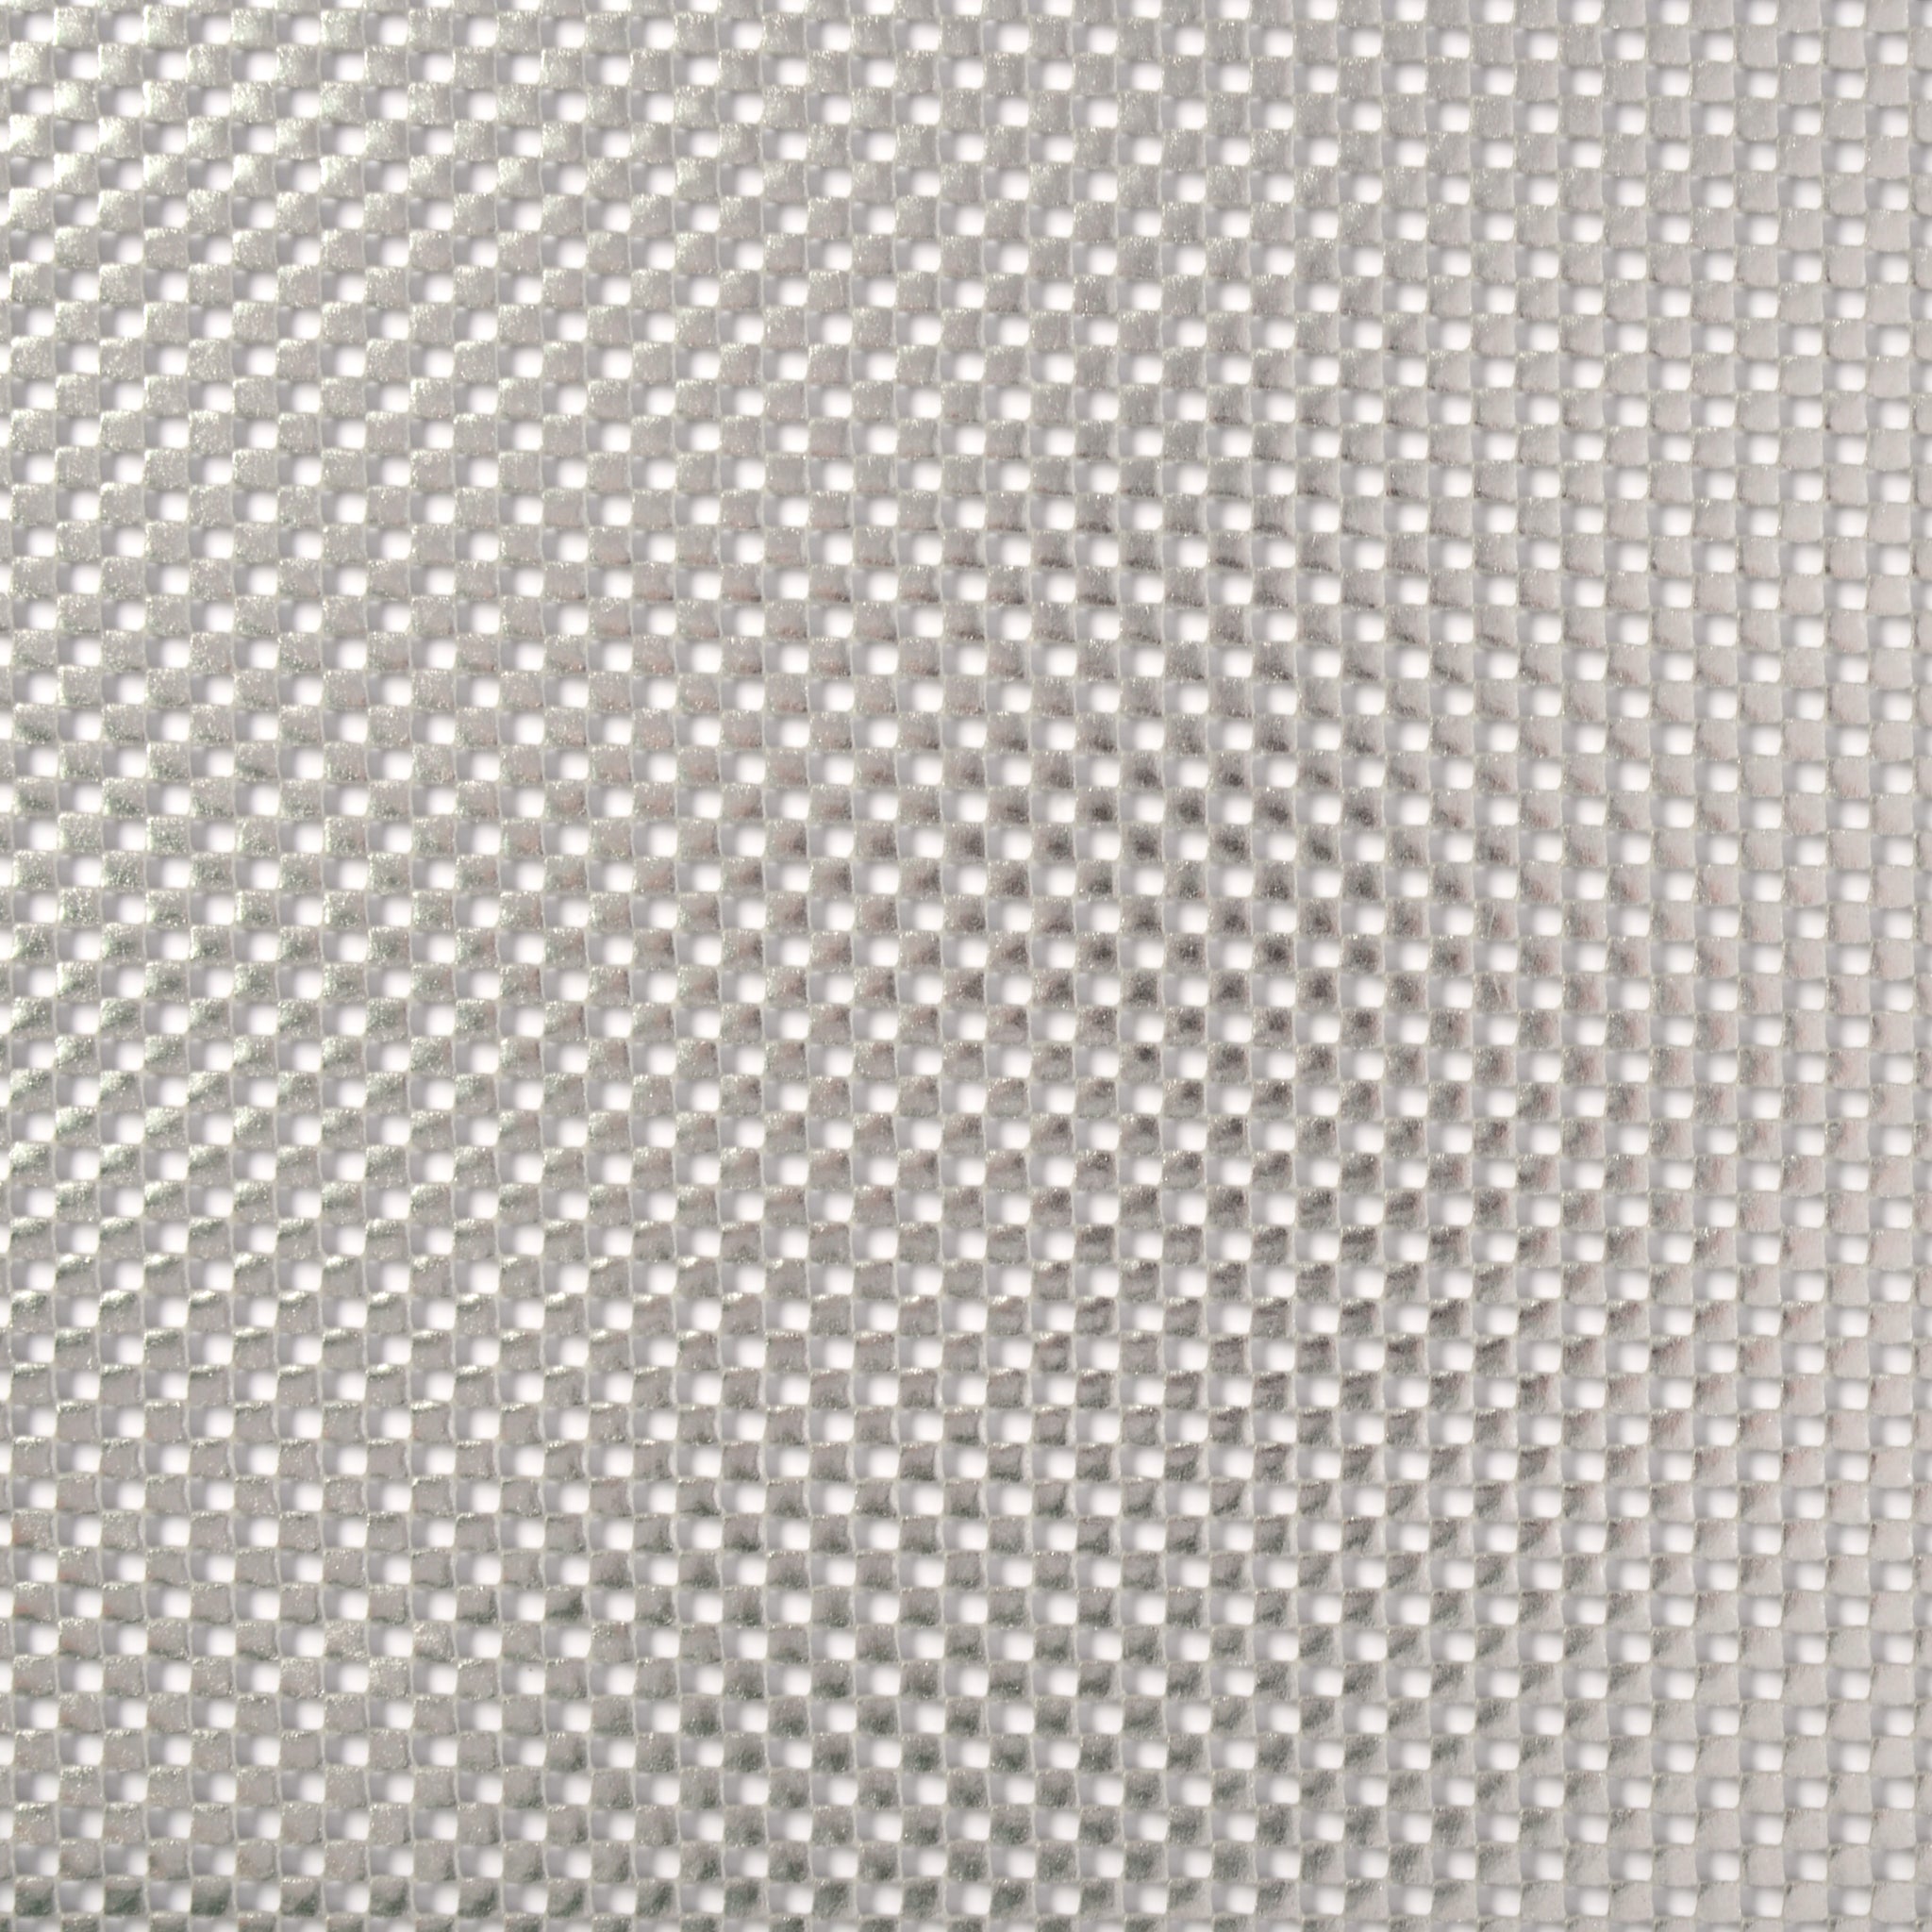 Con-Tact Brand Grip Premium Non-Adhesive Shelf Liner- Thick Grip Alloy Gray  (18''x 8') 1 ct